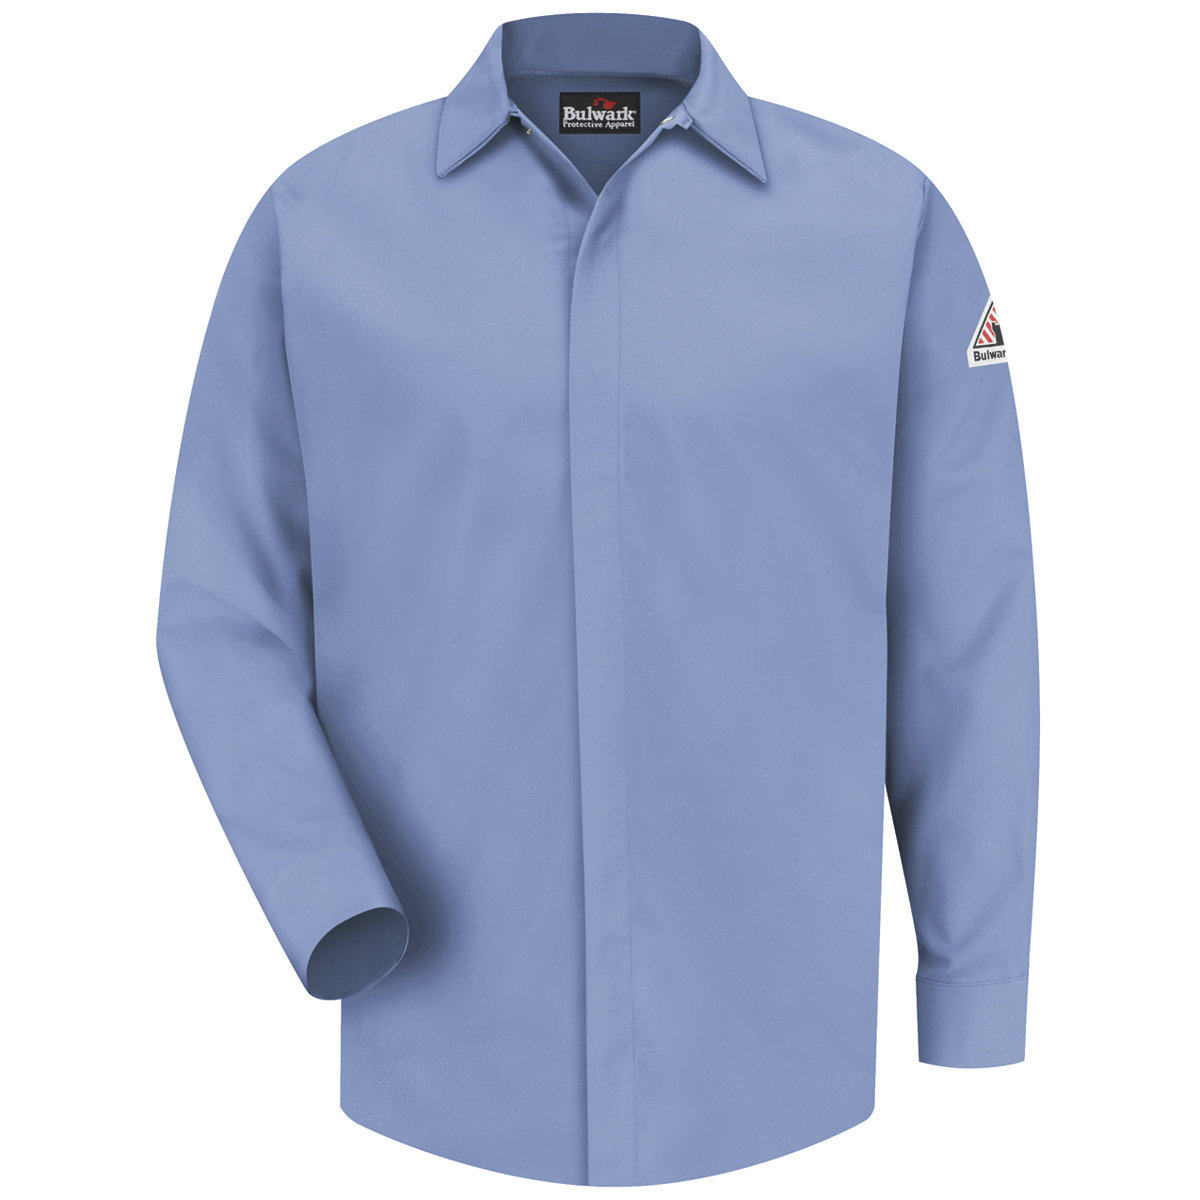 Bulwark® Medium Regular Light Blue Westex Ultrasoft®/Cotton/Nylon Flame Resistant Work Shirt With Gripper Front Closure